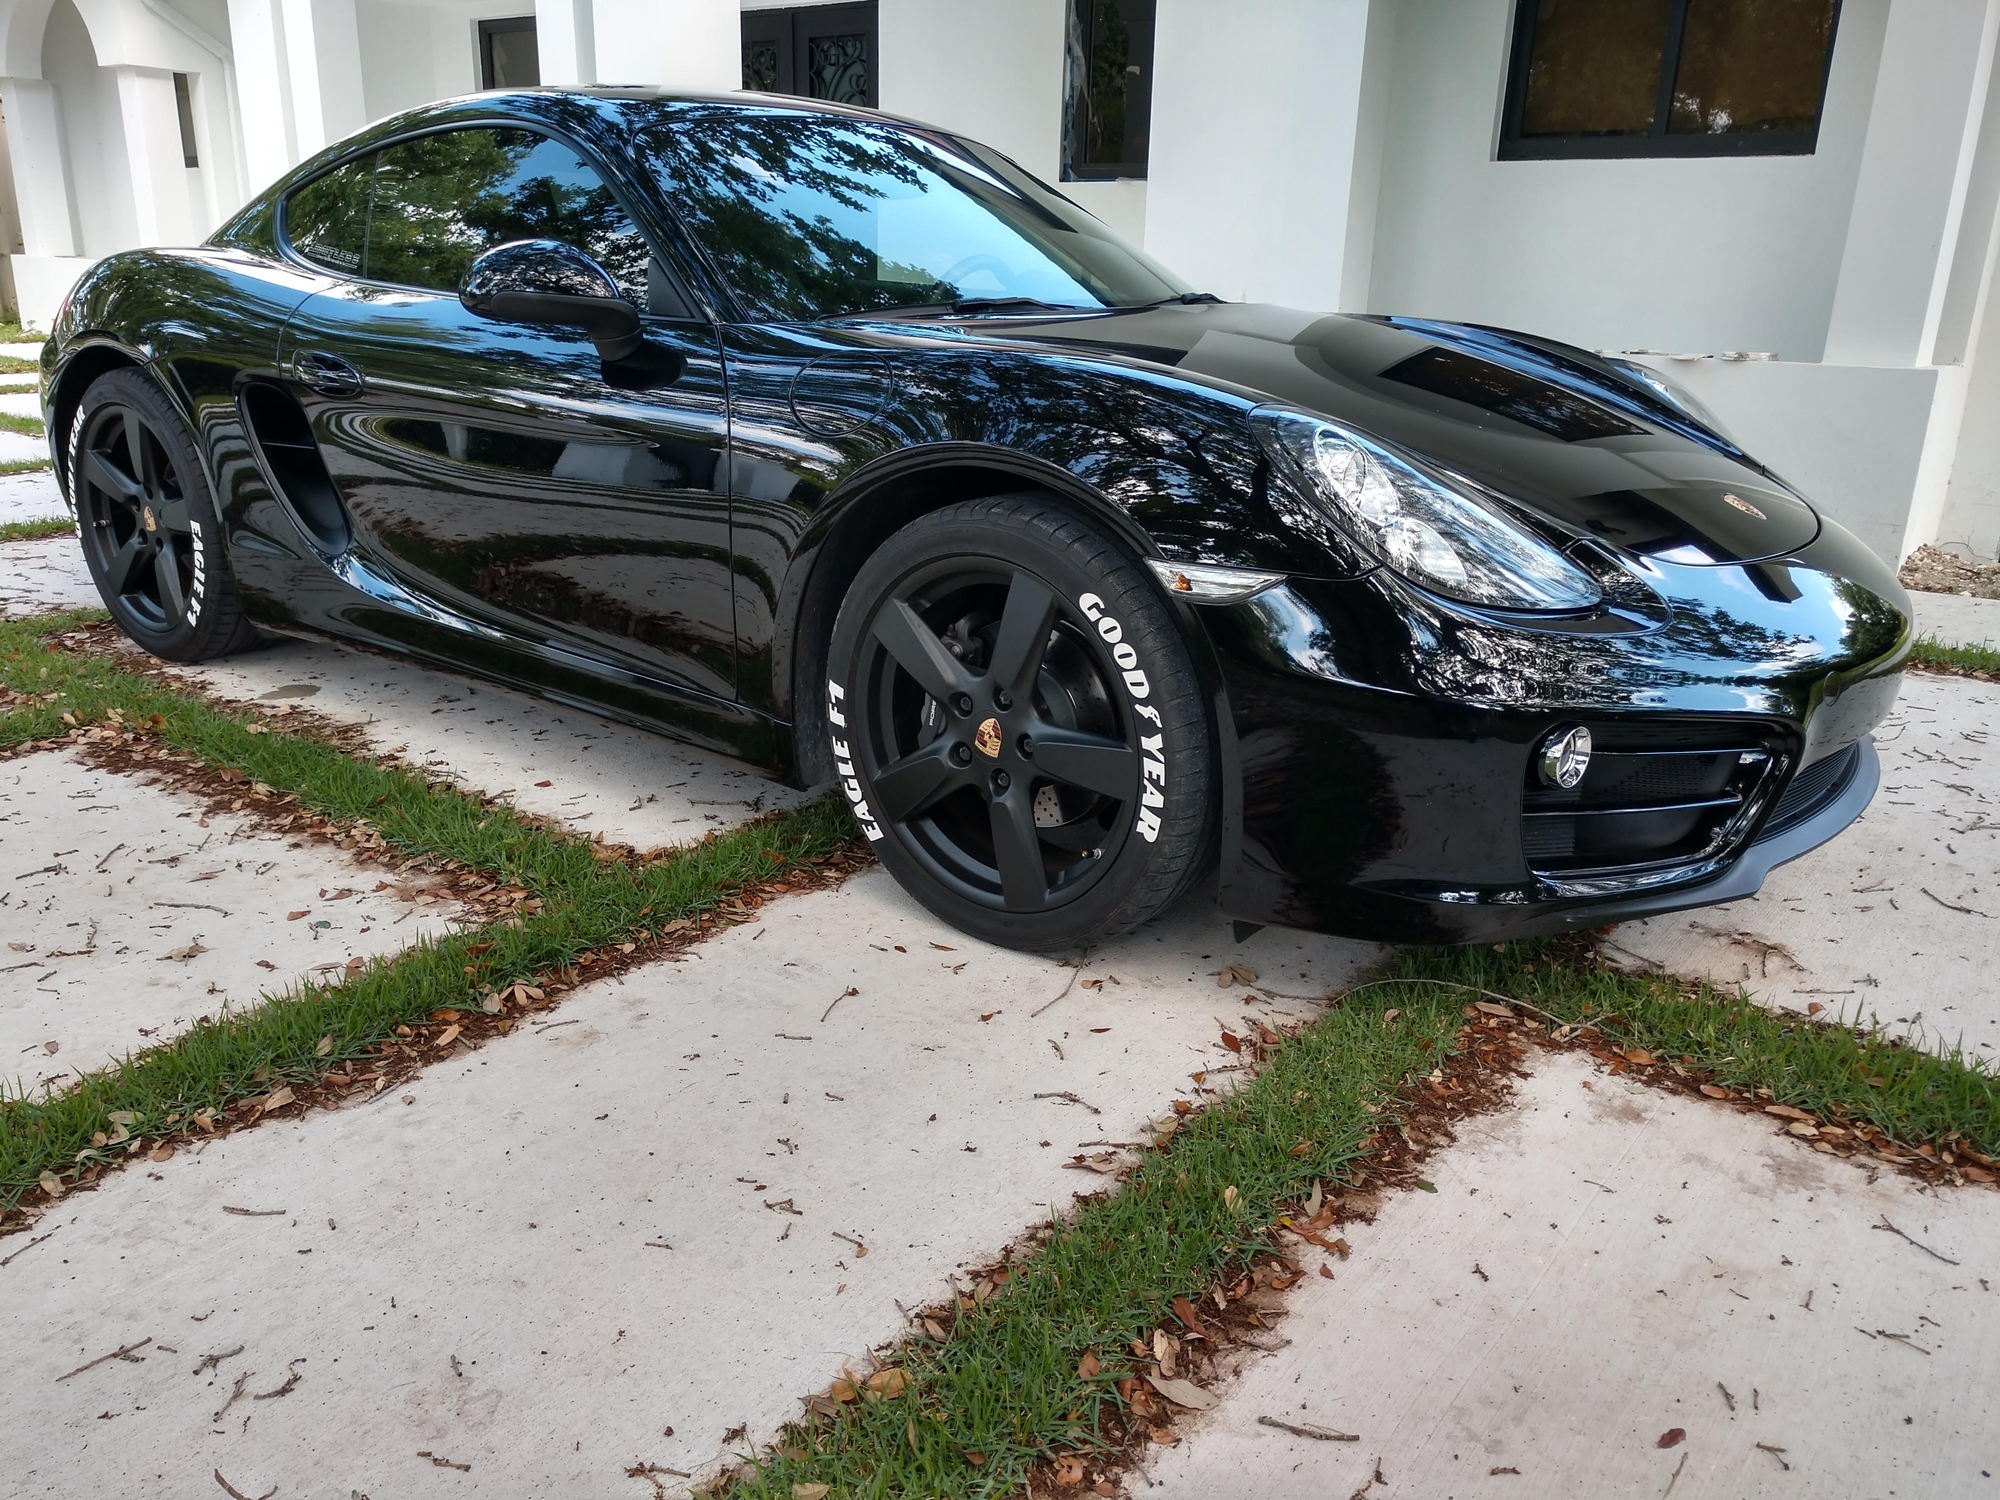 2014 Porsche Cayman - 2014 Black Porsche Cayman Base 19350 mls - Used - VIN WP0AA2A86EK173714 - 19,350 Miles - 6 cyl - 2WD - Manual - Coupe - Black - Miami, FL 33173, United States